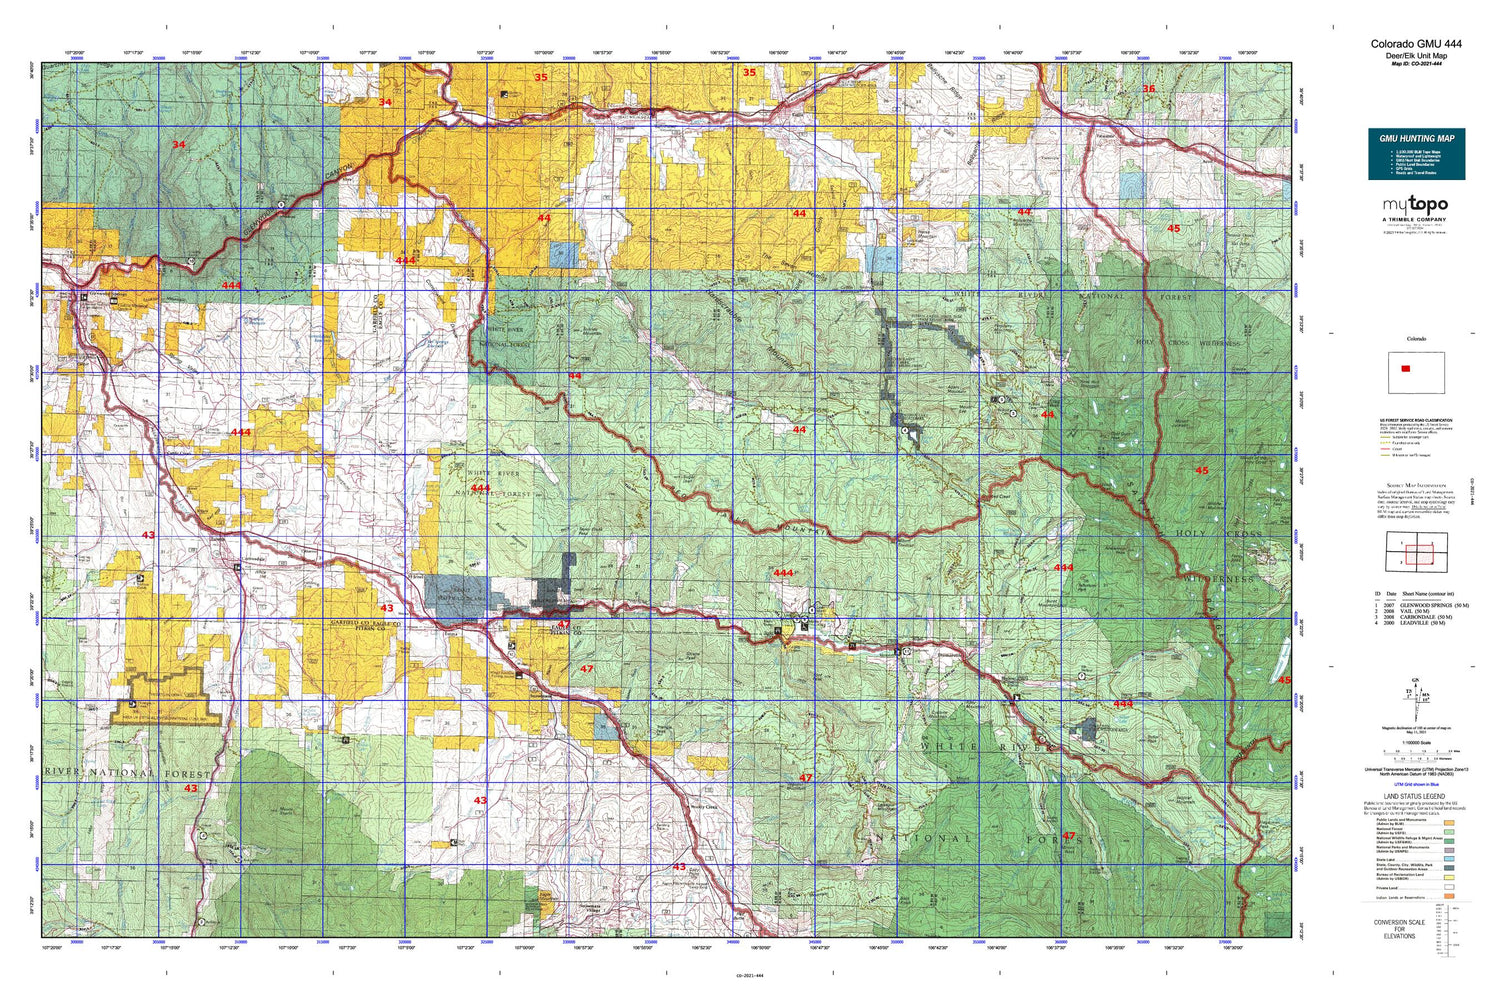 Colorado GMU 444 Map Image